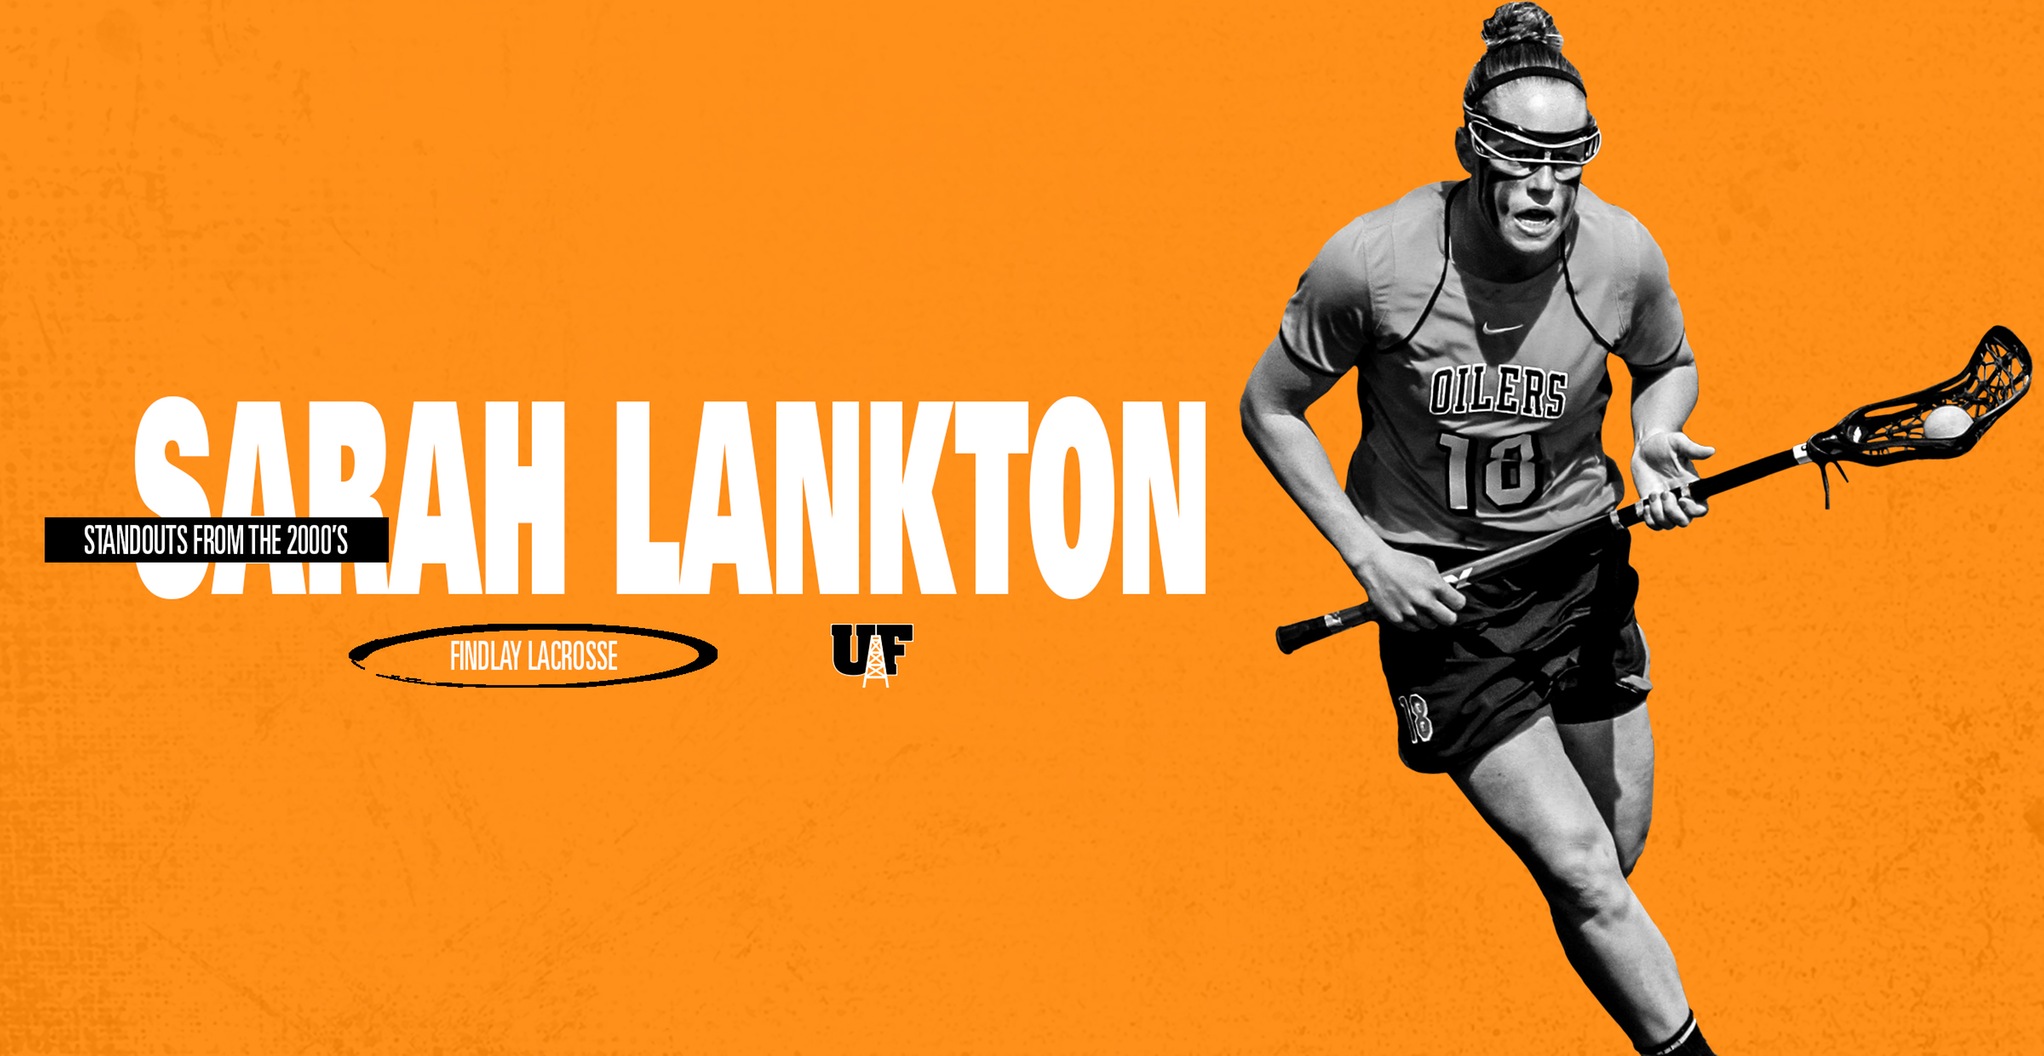 Sarah Lankton, women's lacrosse player